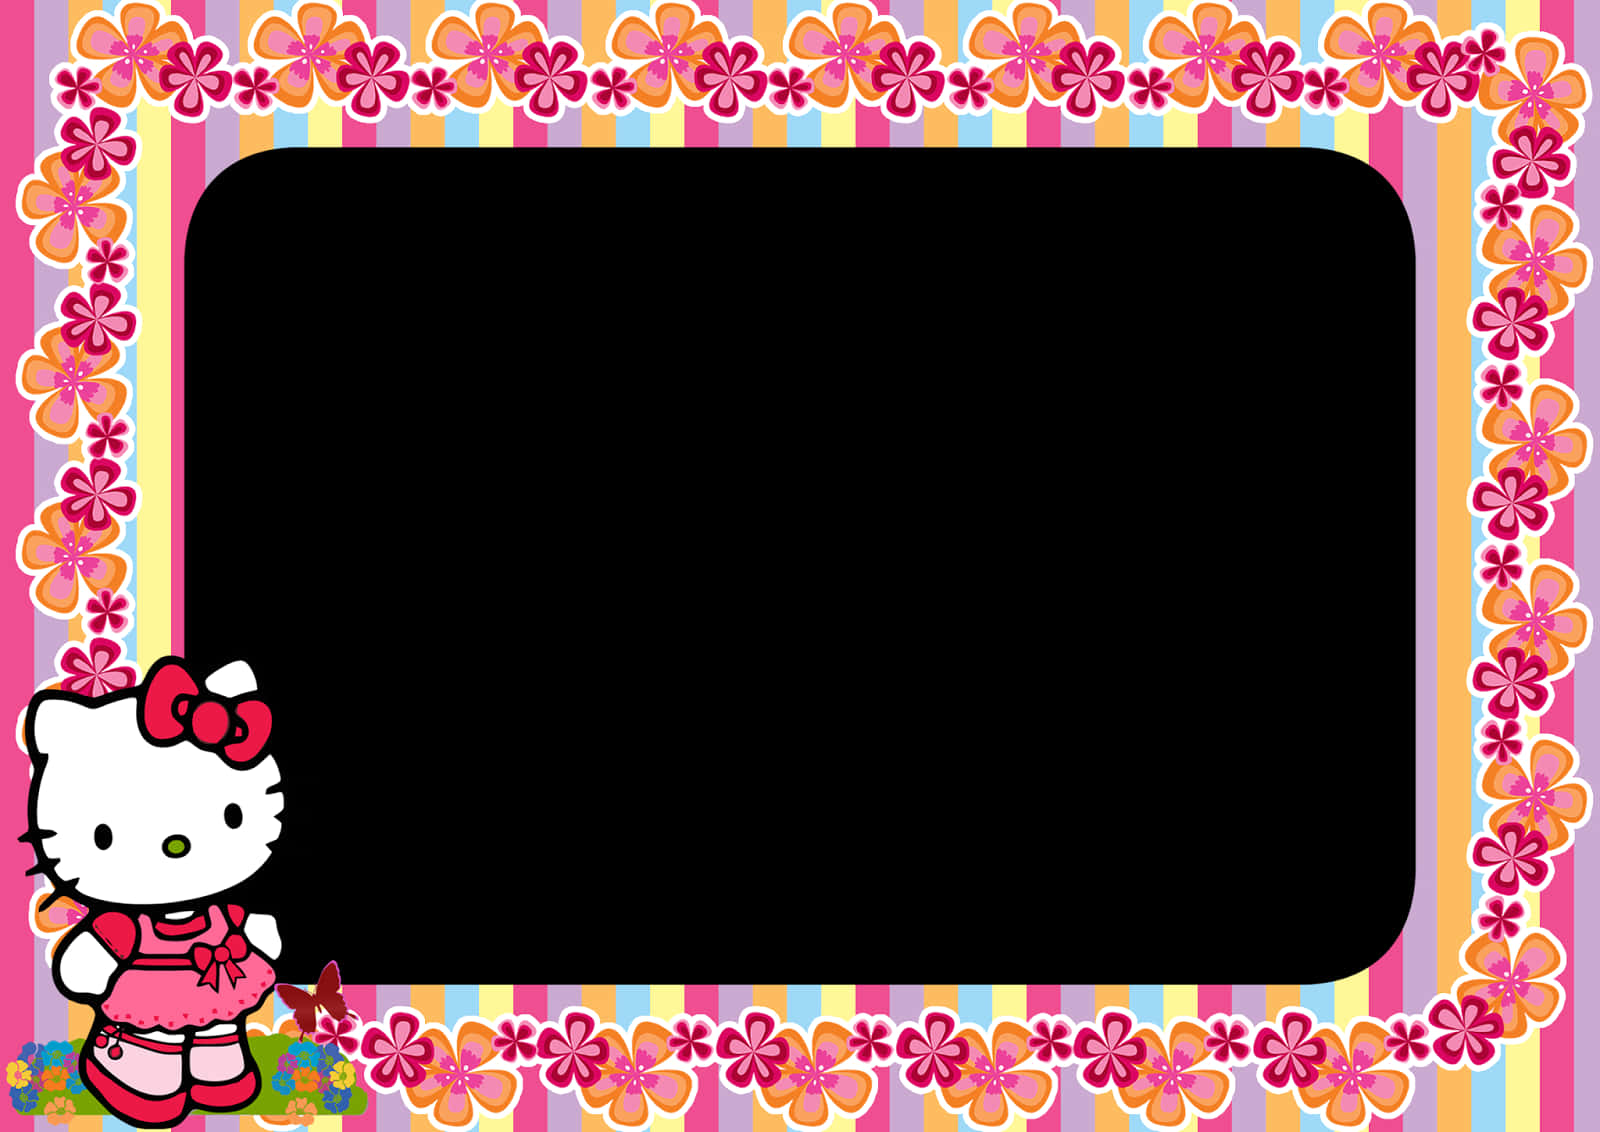 Rainbow-colored Hello Kitty Frame